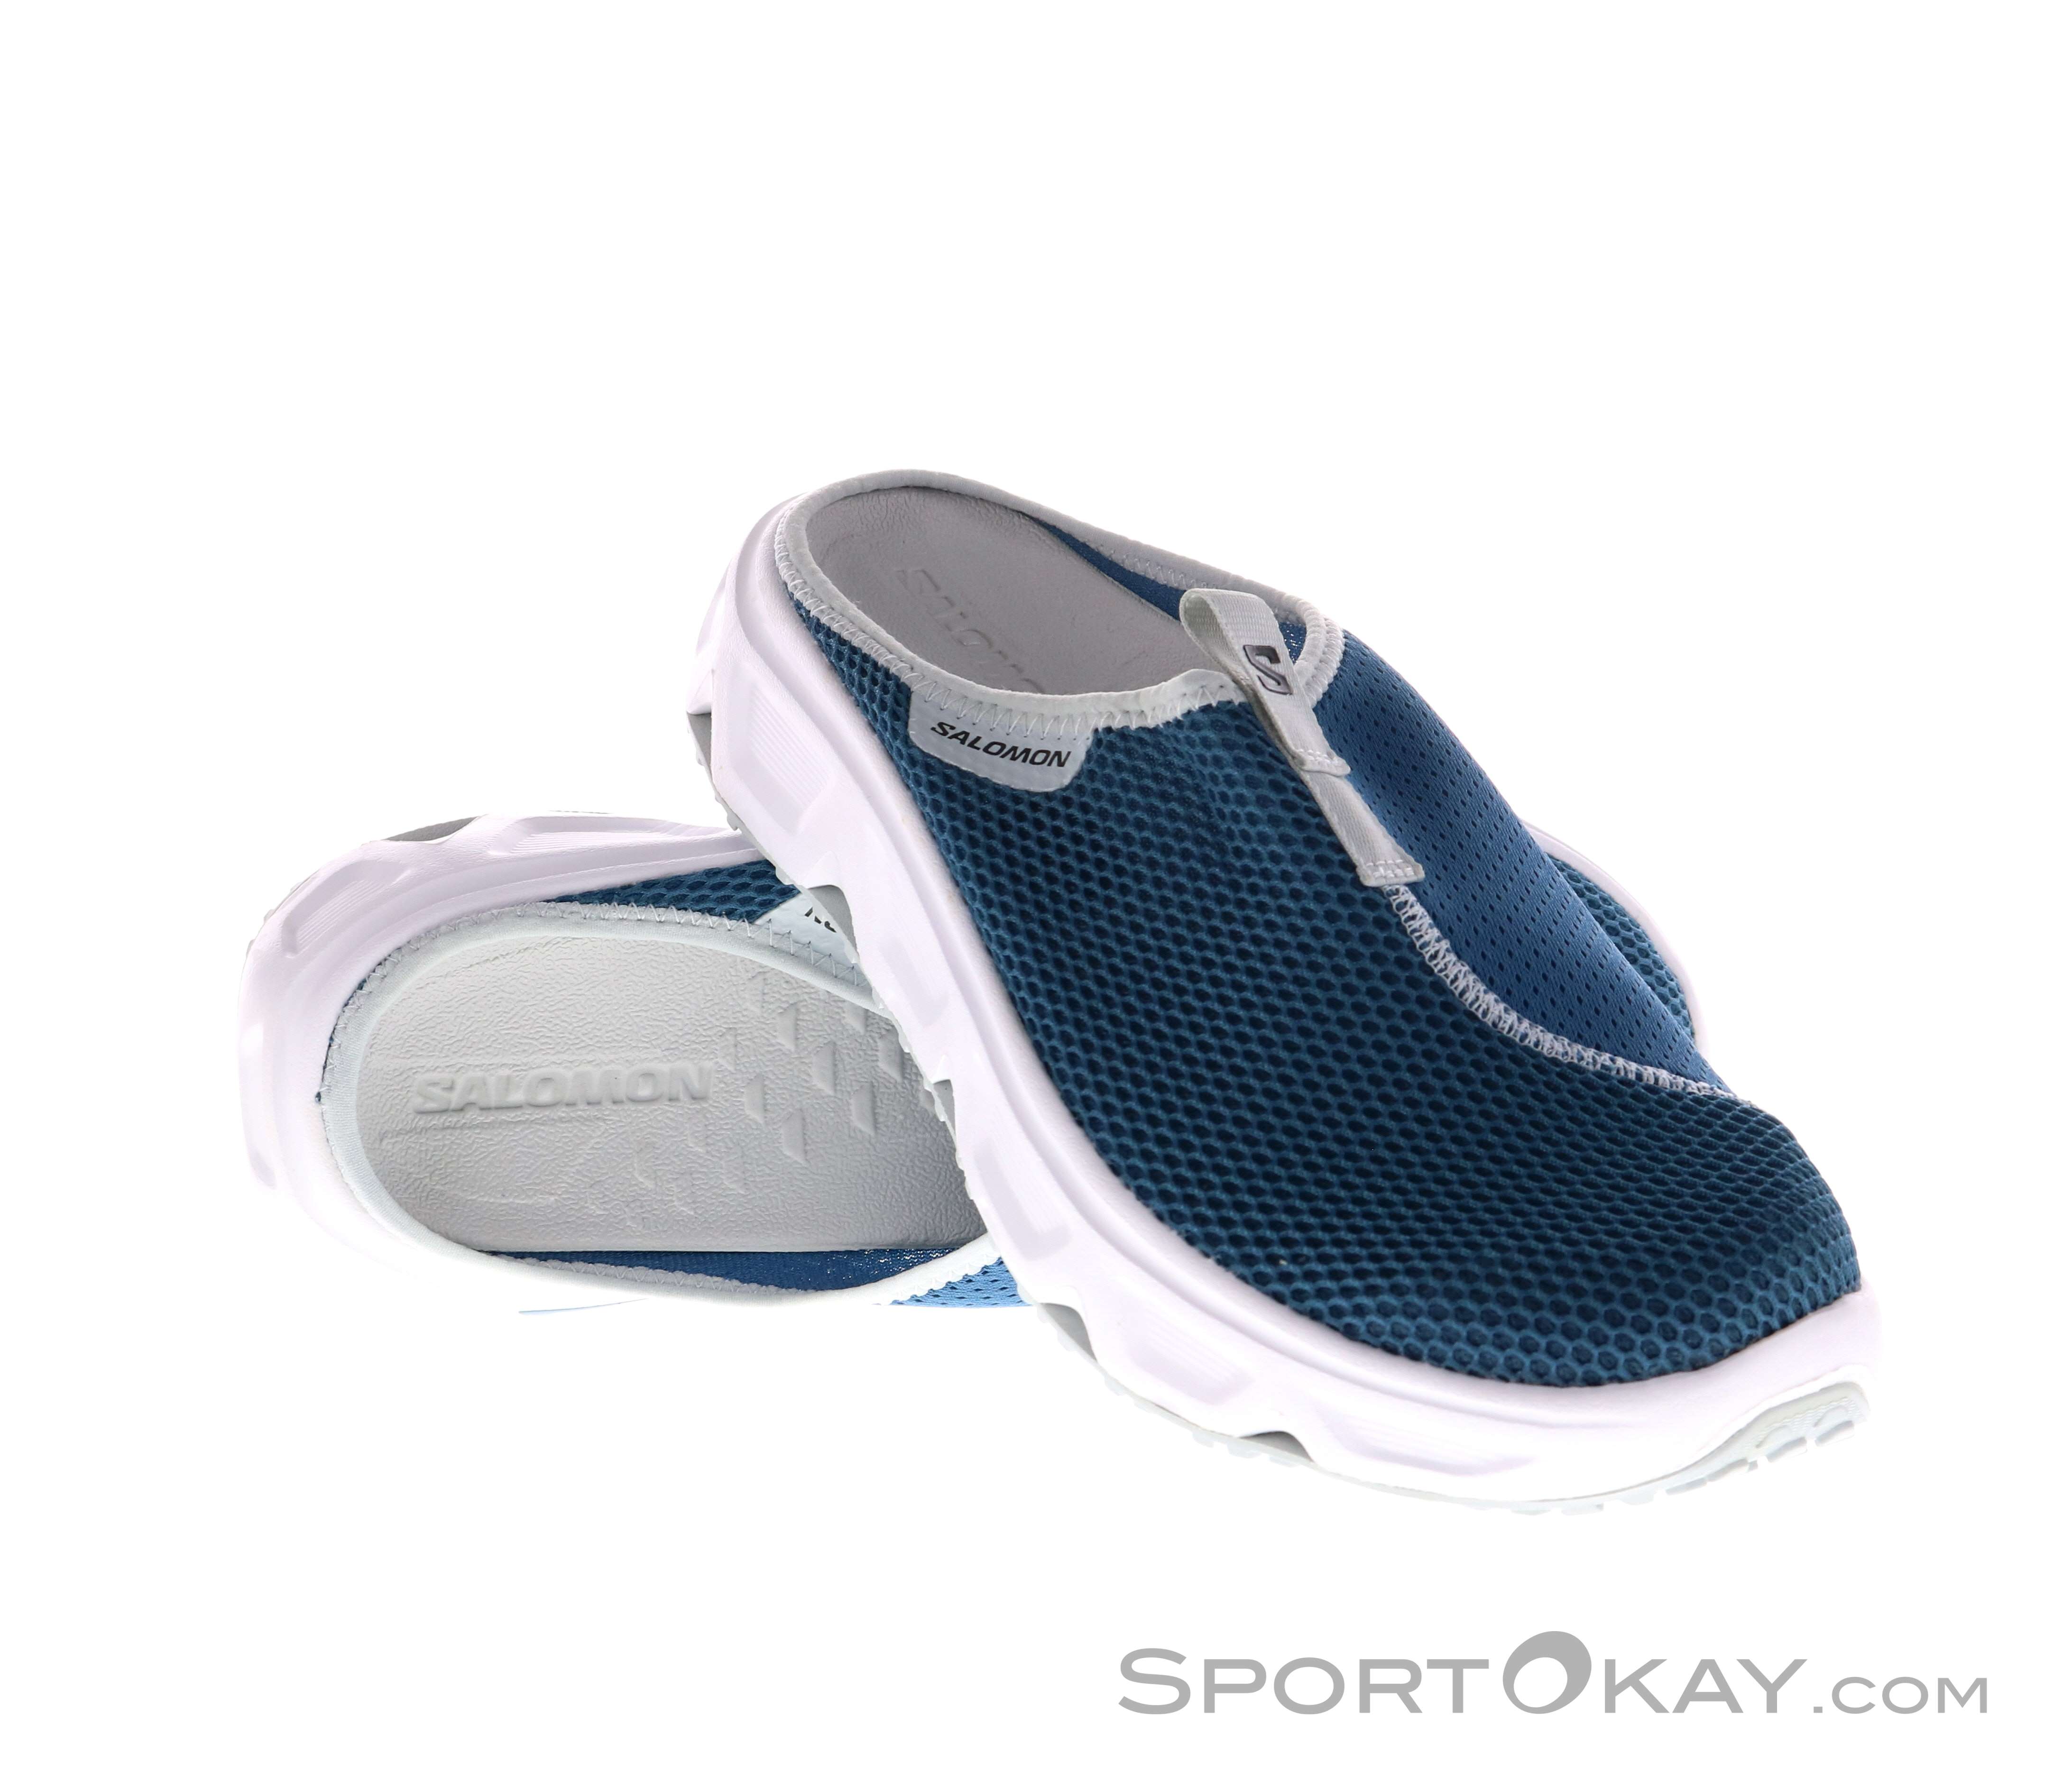 Salomon Reelax Slide 5.0 - Sandals Men's, Buy online